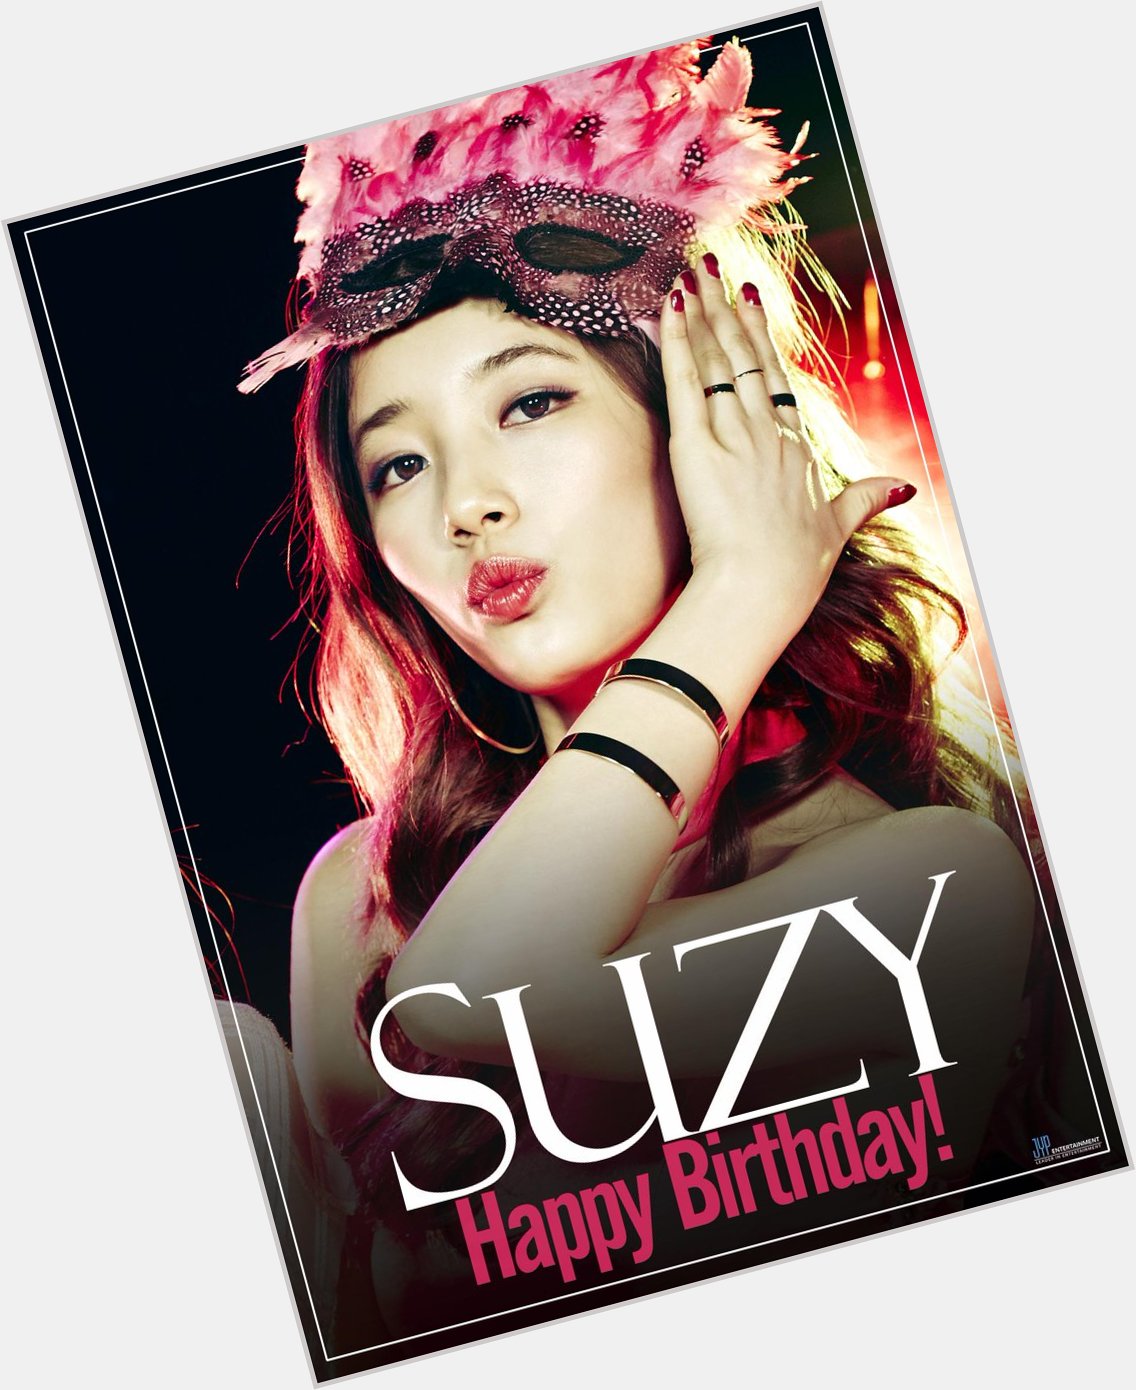 Happy Birthday to my Bae Suzy 